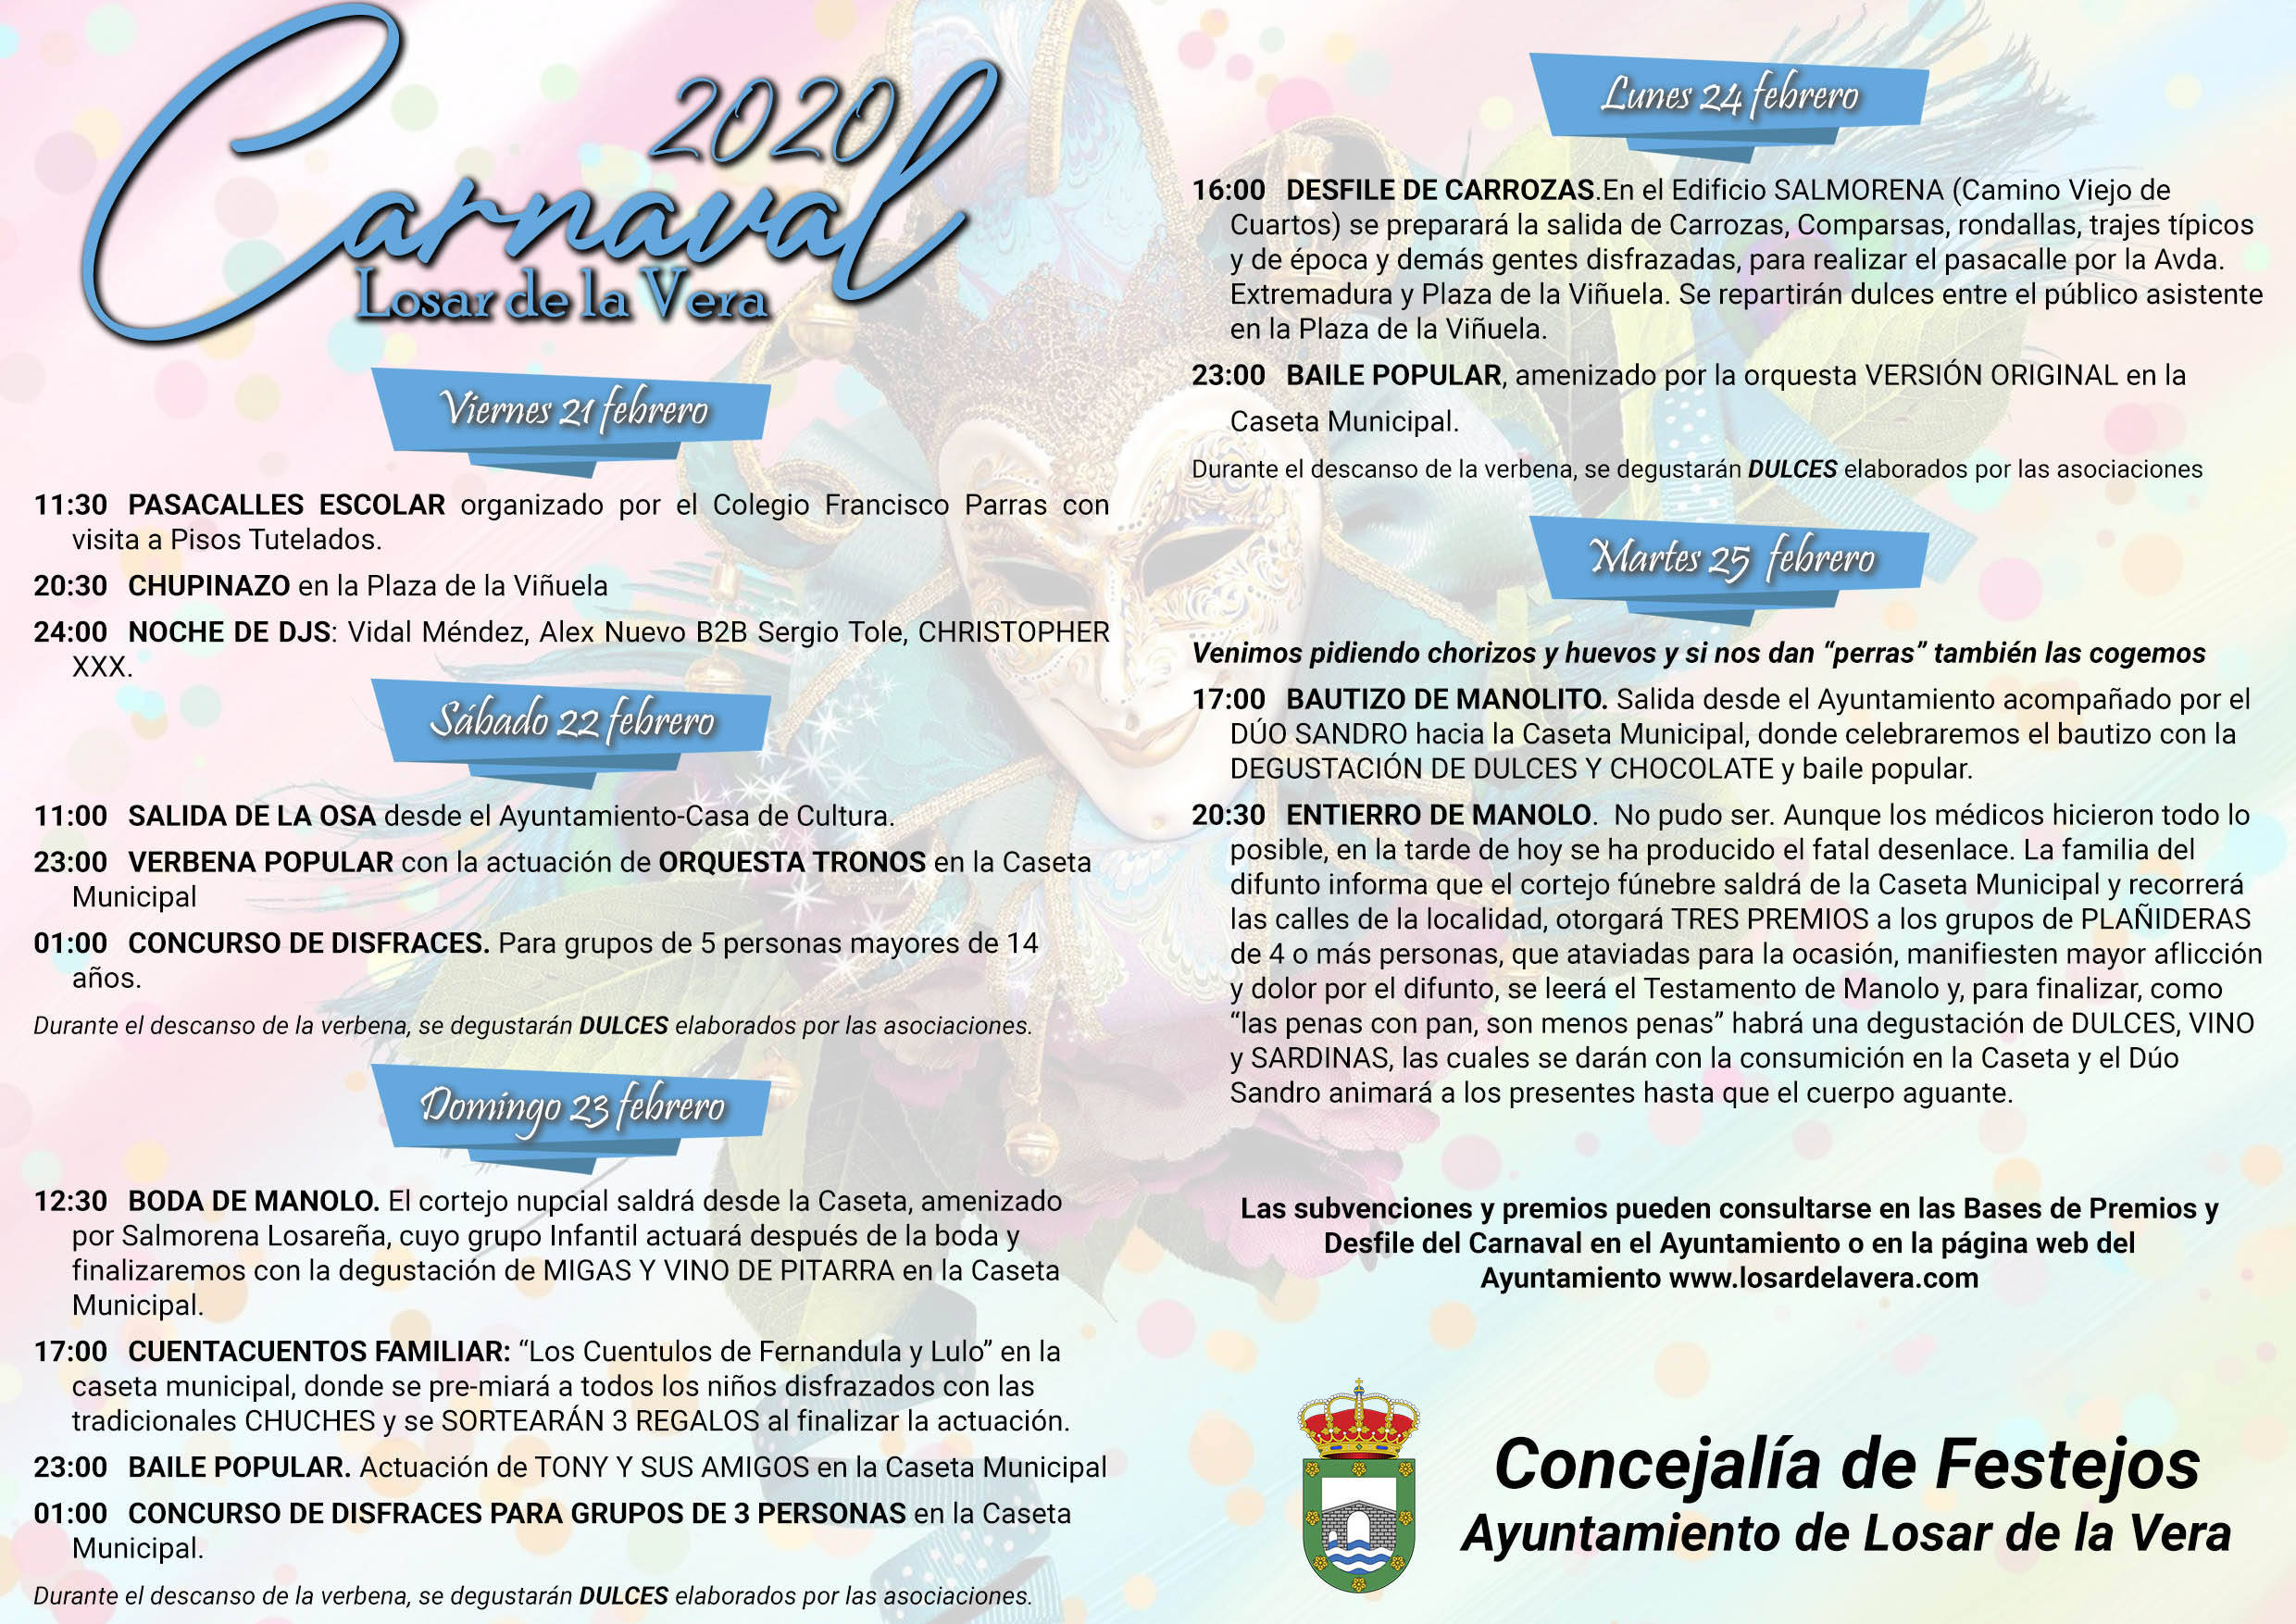 Carnaval 2020 - Losar de la Vera (Cáceres) 2